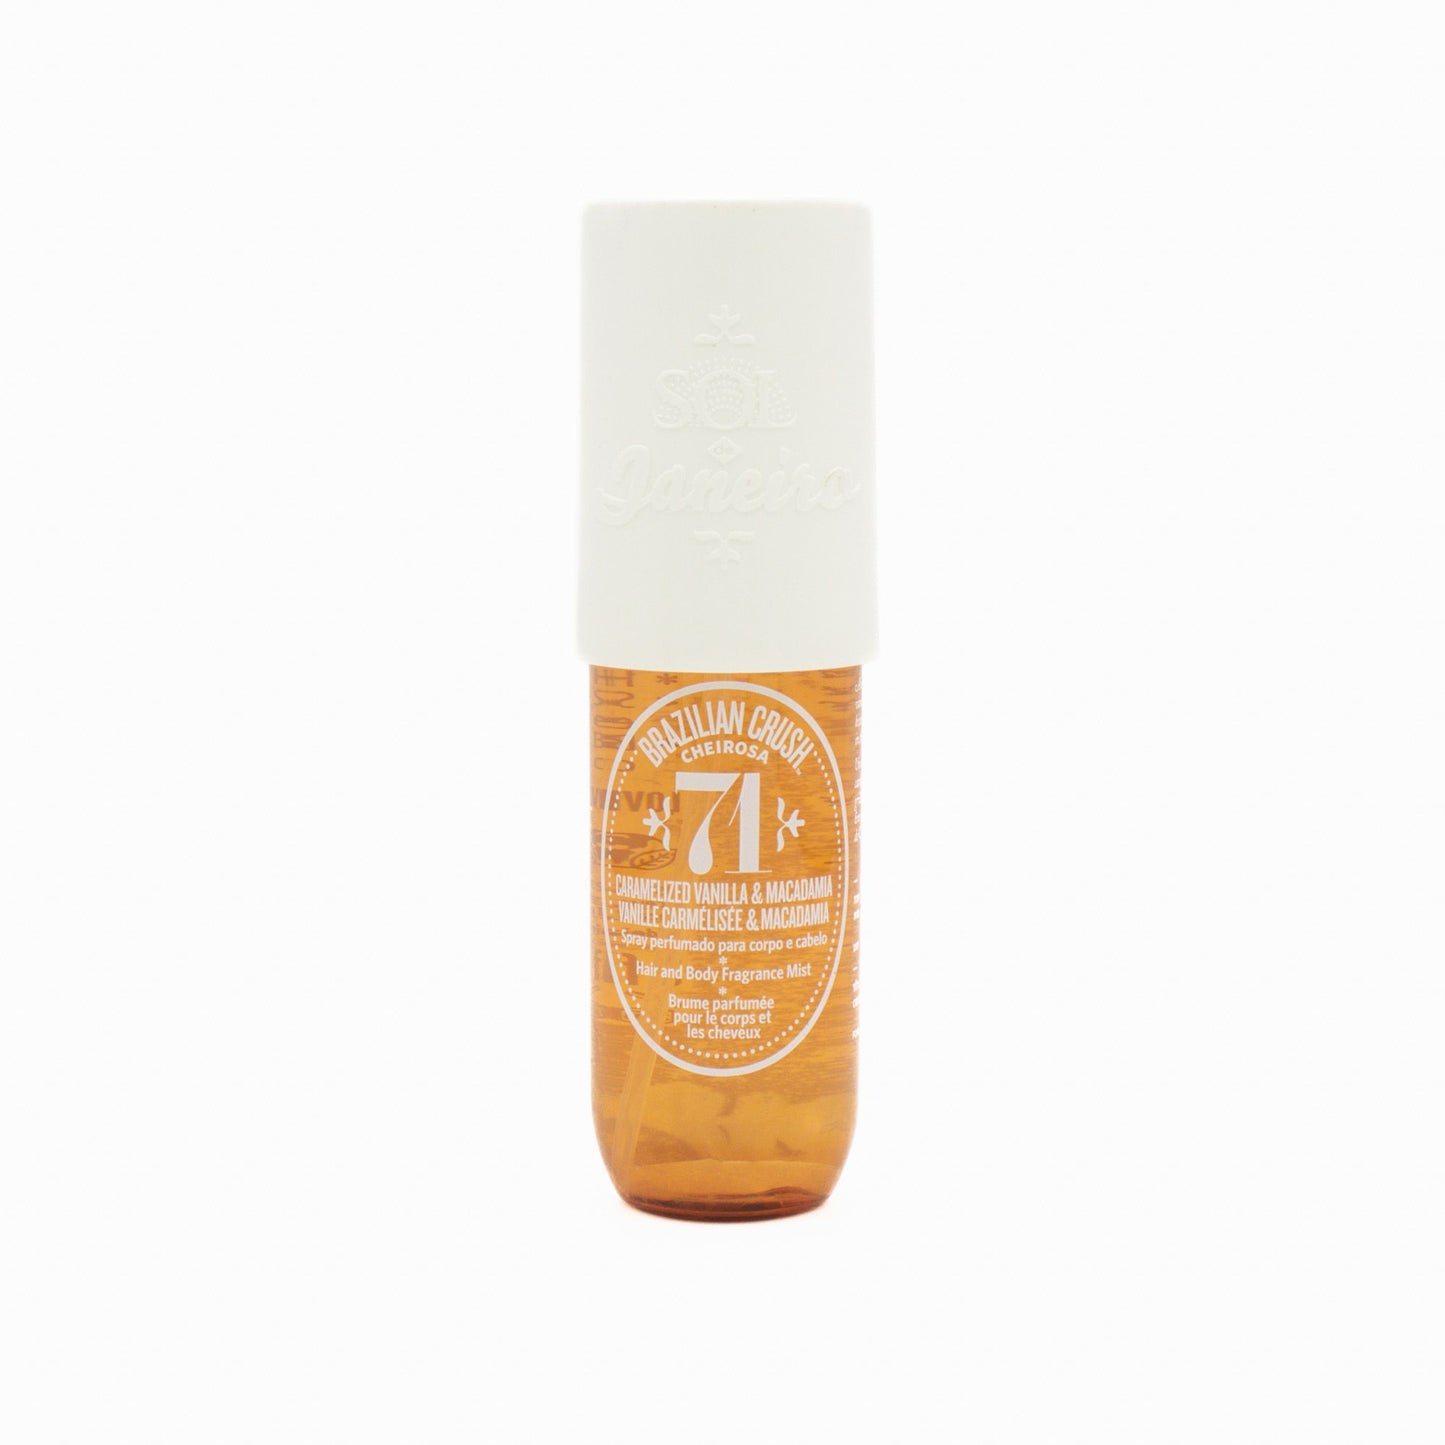 Sol de Janeiro Cheirosa 71 Hair & Body Fragrance Mist 90ml - Imperfect Container